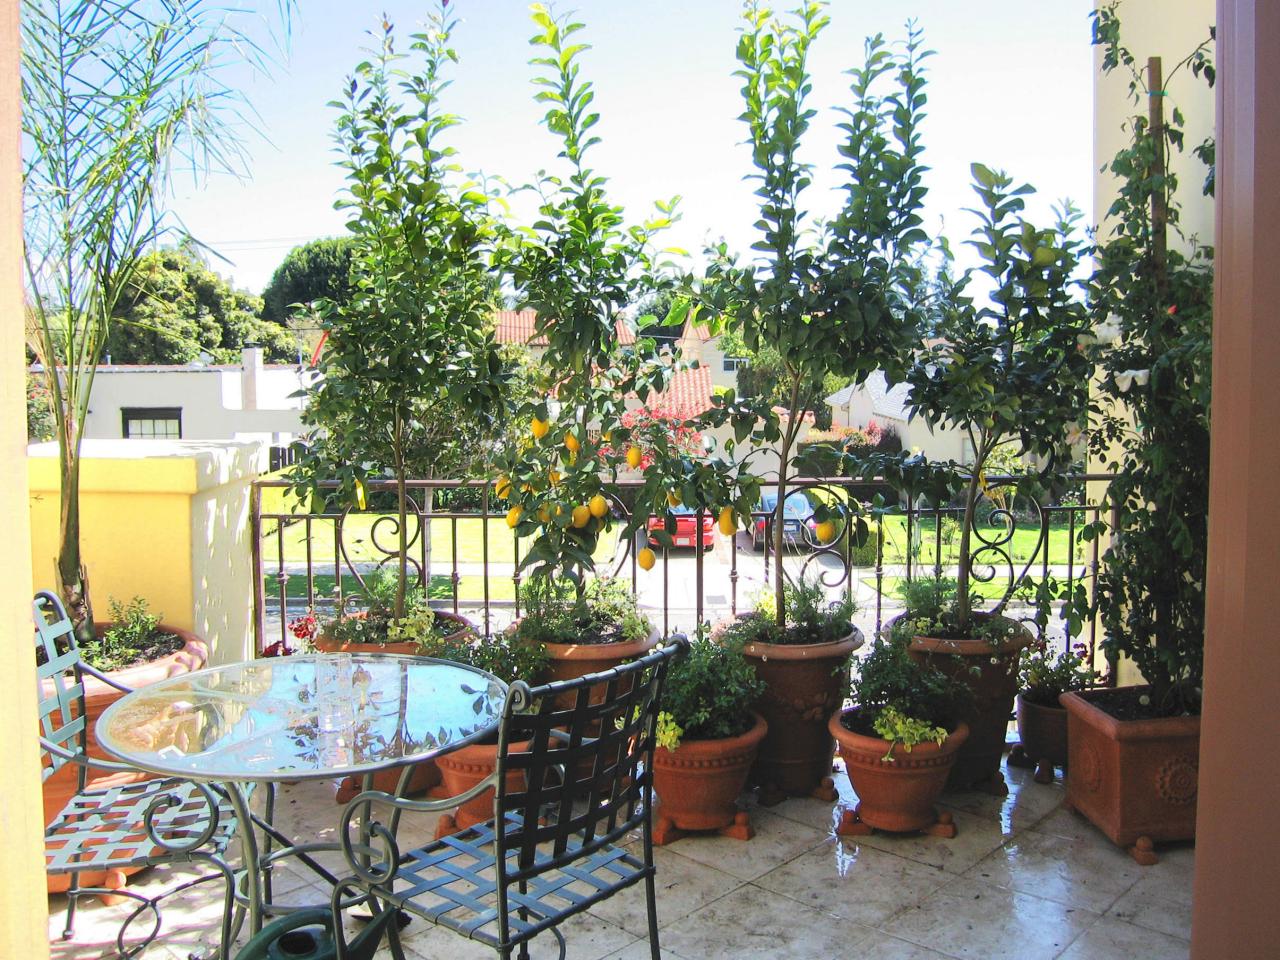 patio patios decorating hgtv living trees balcony into plants tree outdoor pots decks potted citrus landscape idea planters oasis simple